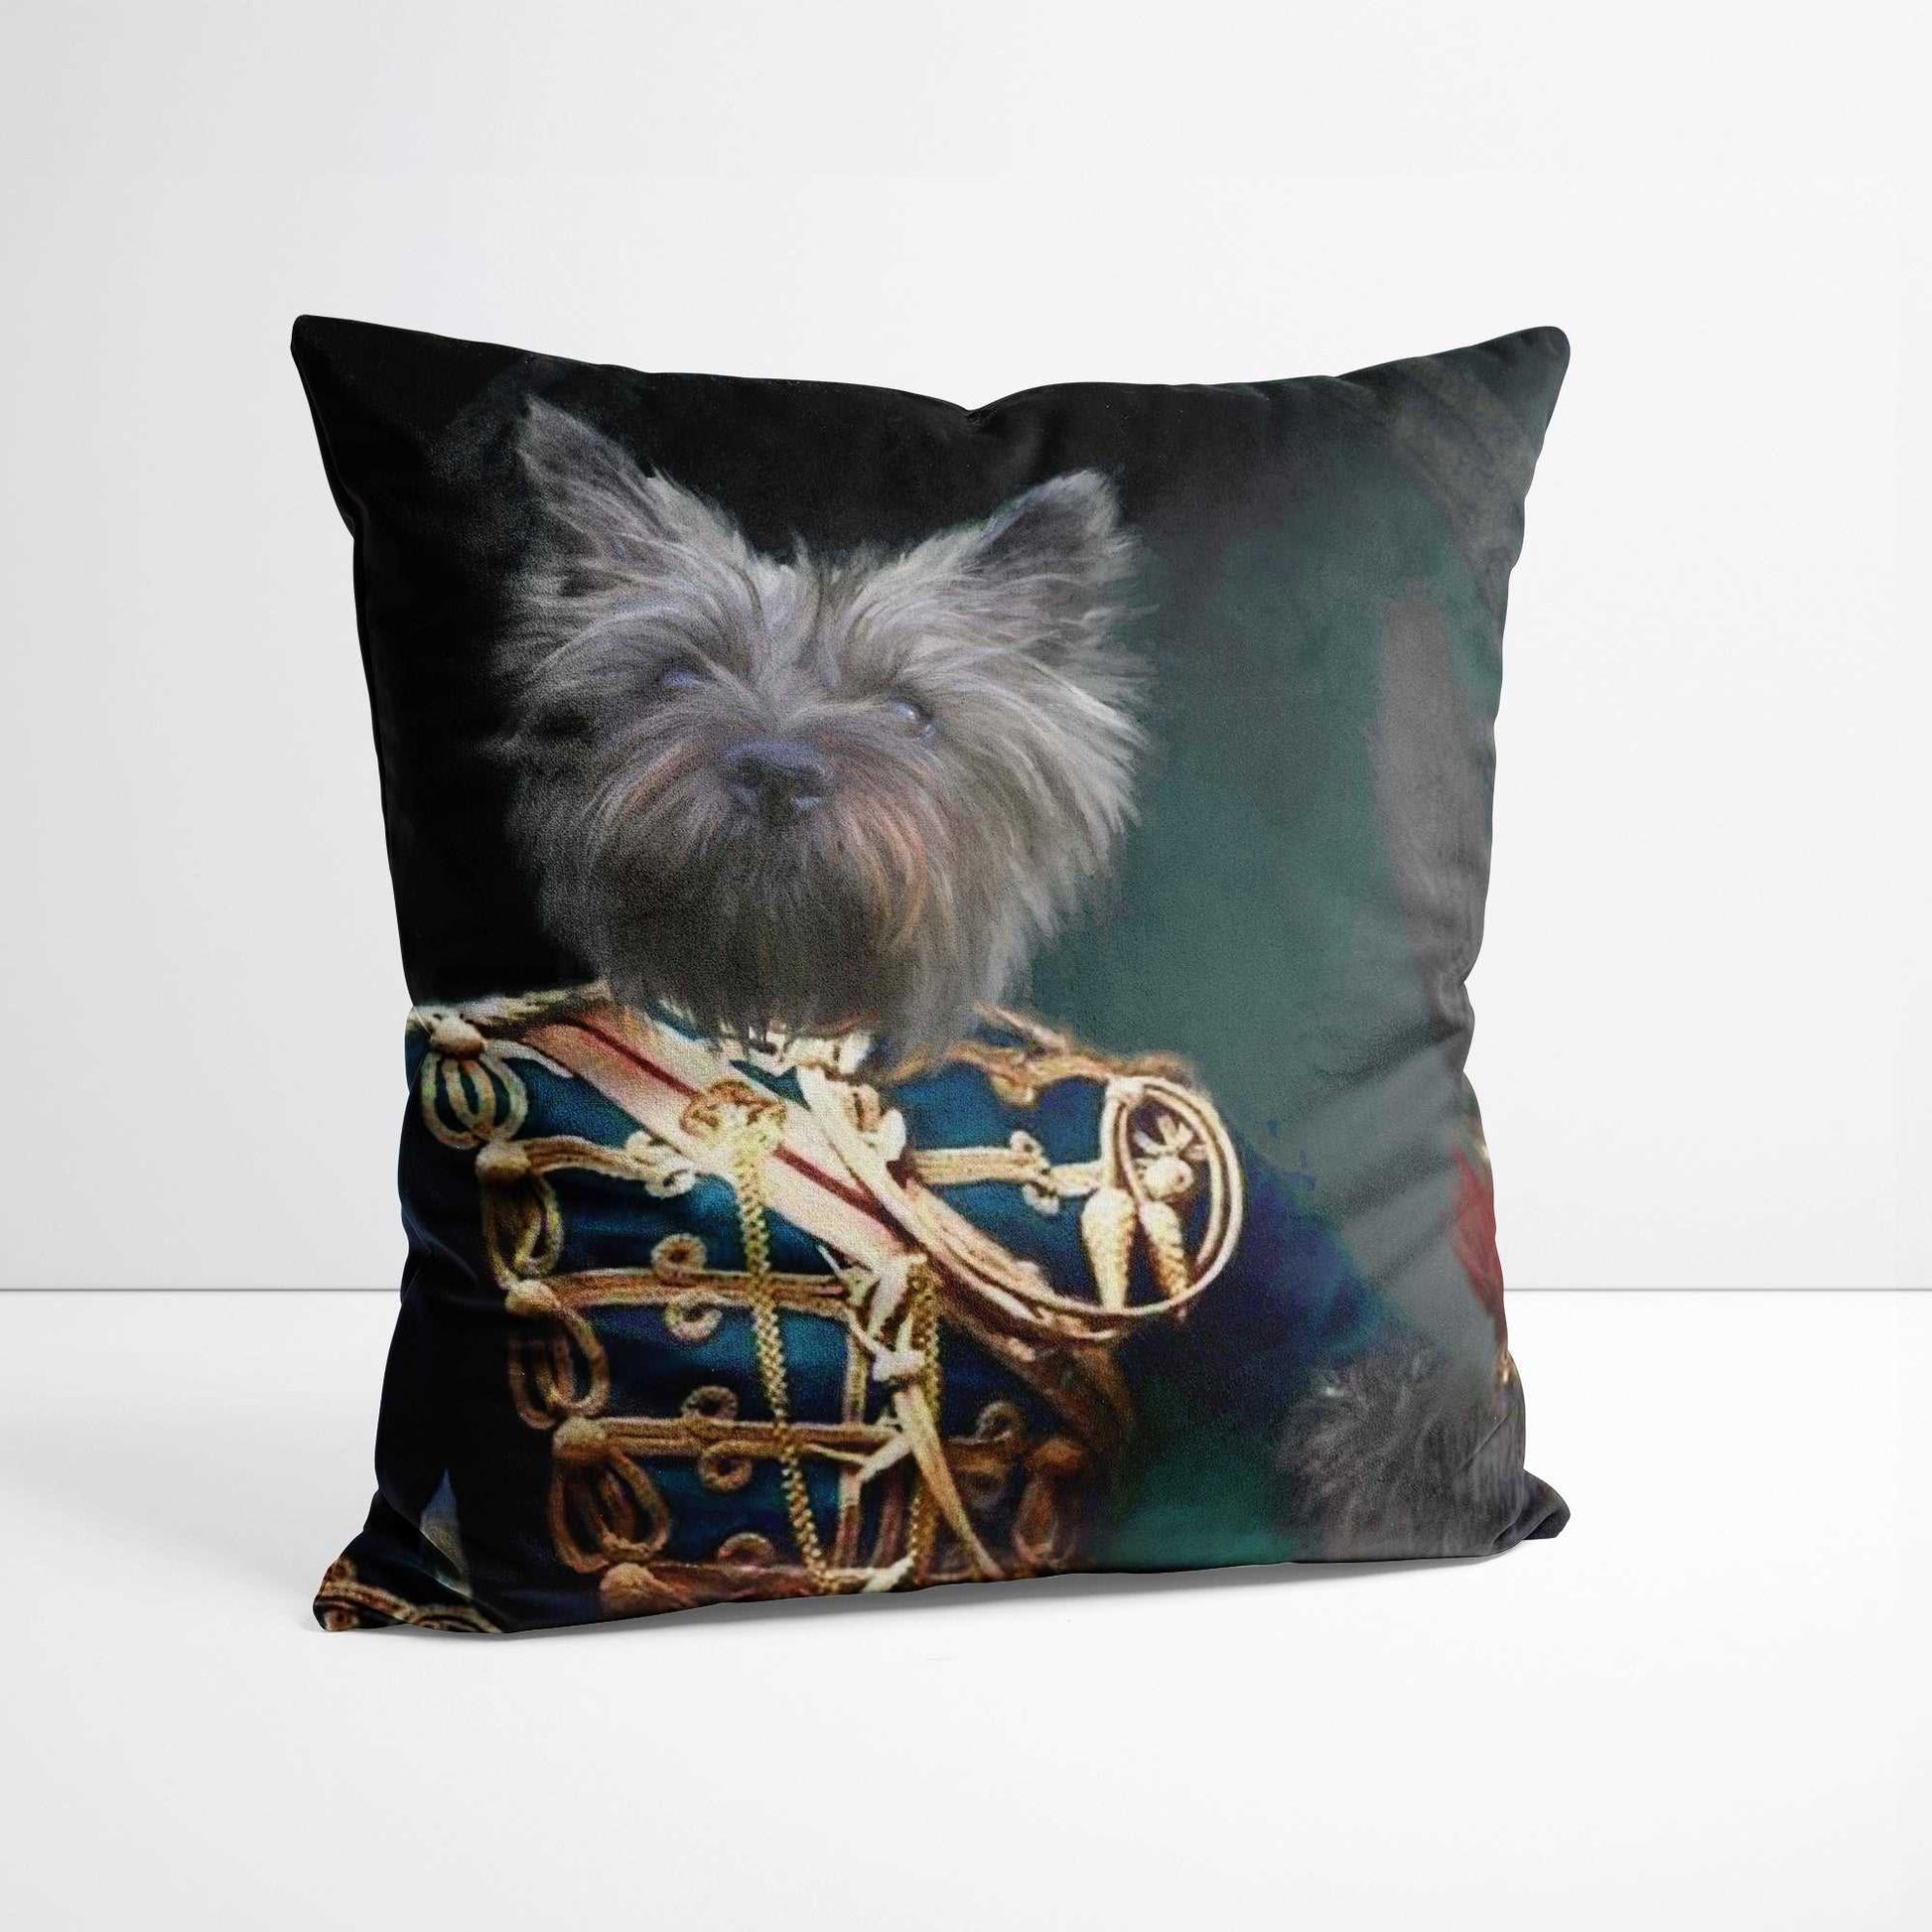 Count - Custom Royal Pet Portrait Cushion